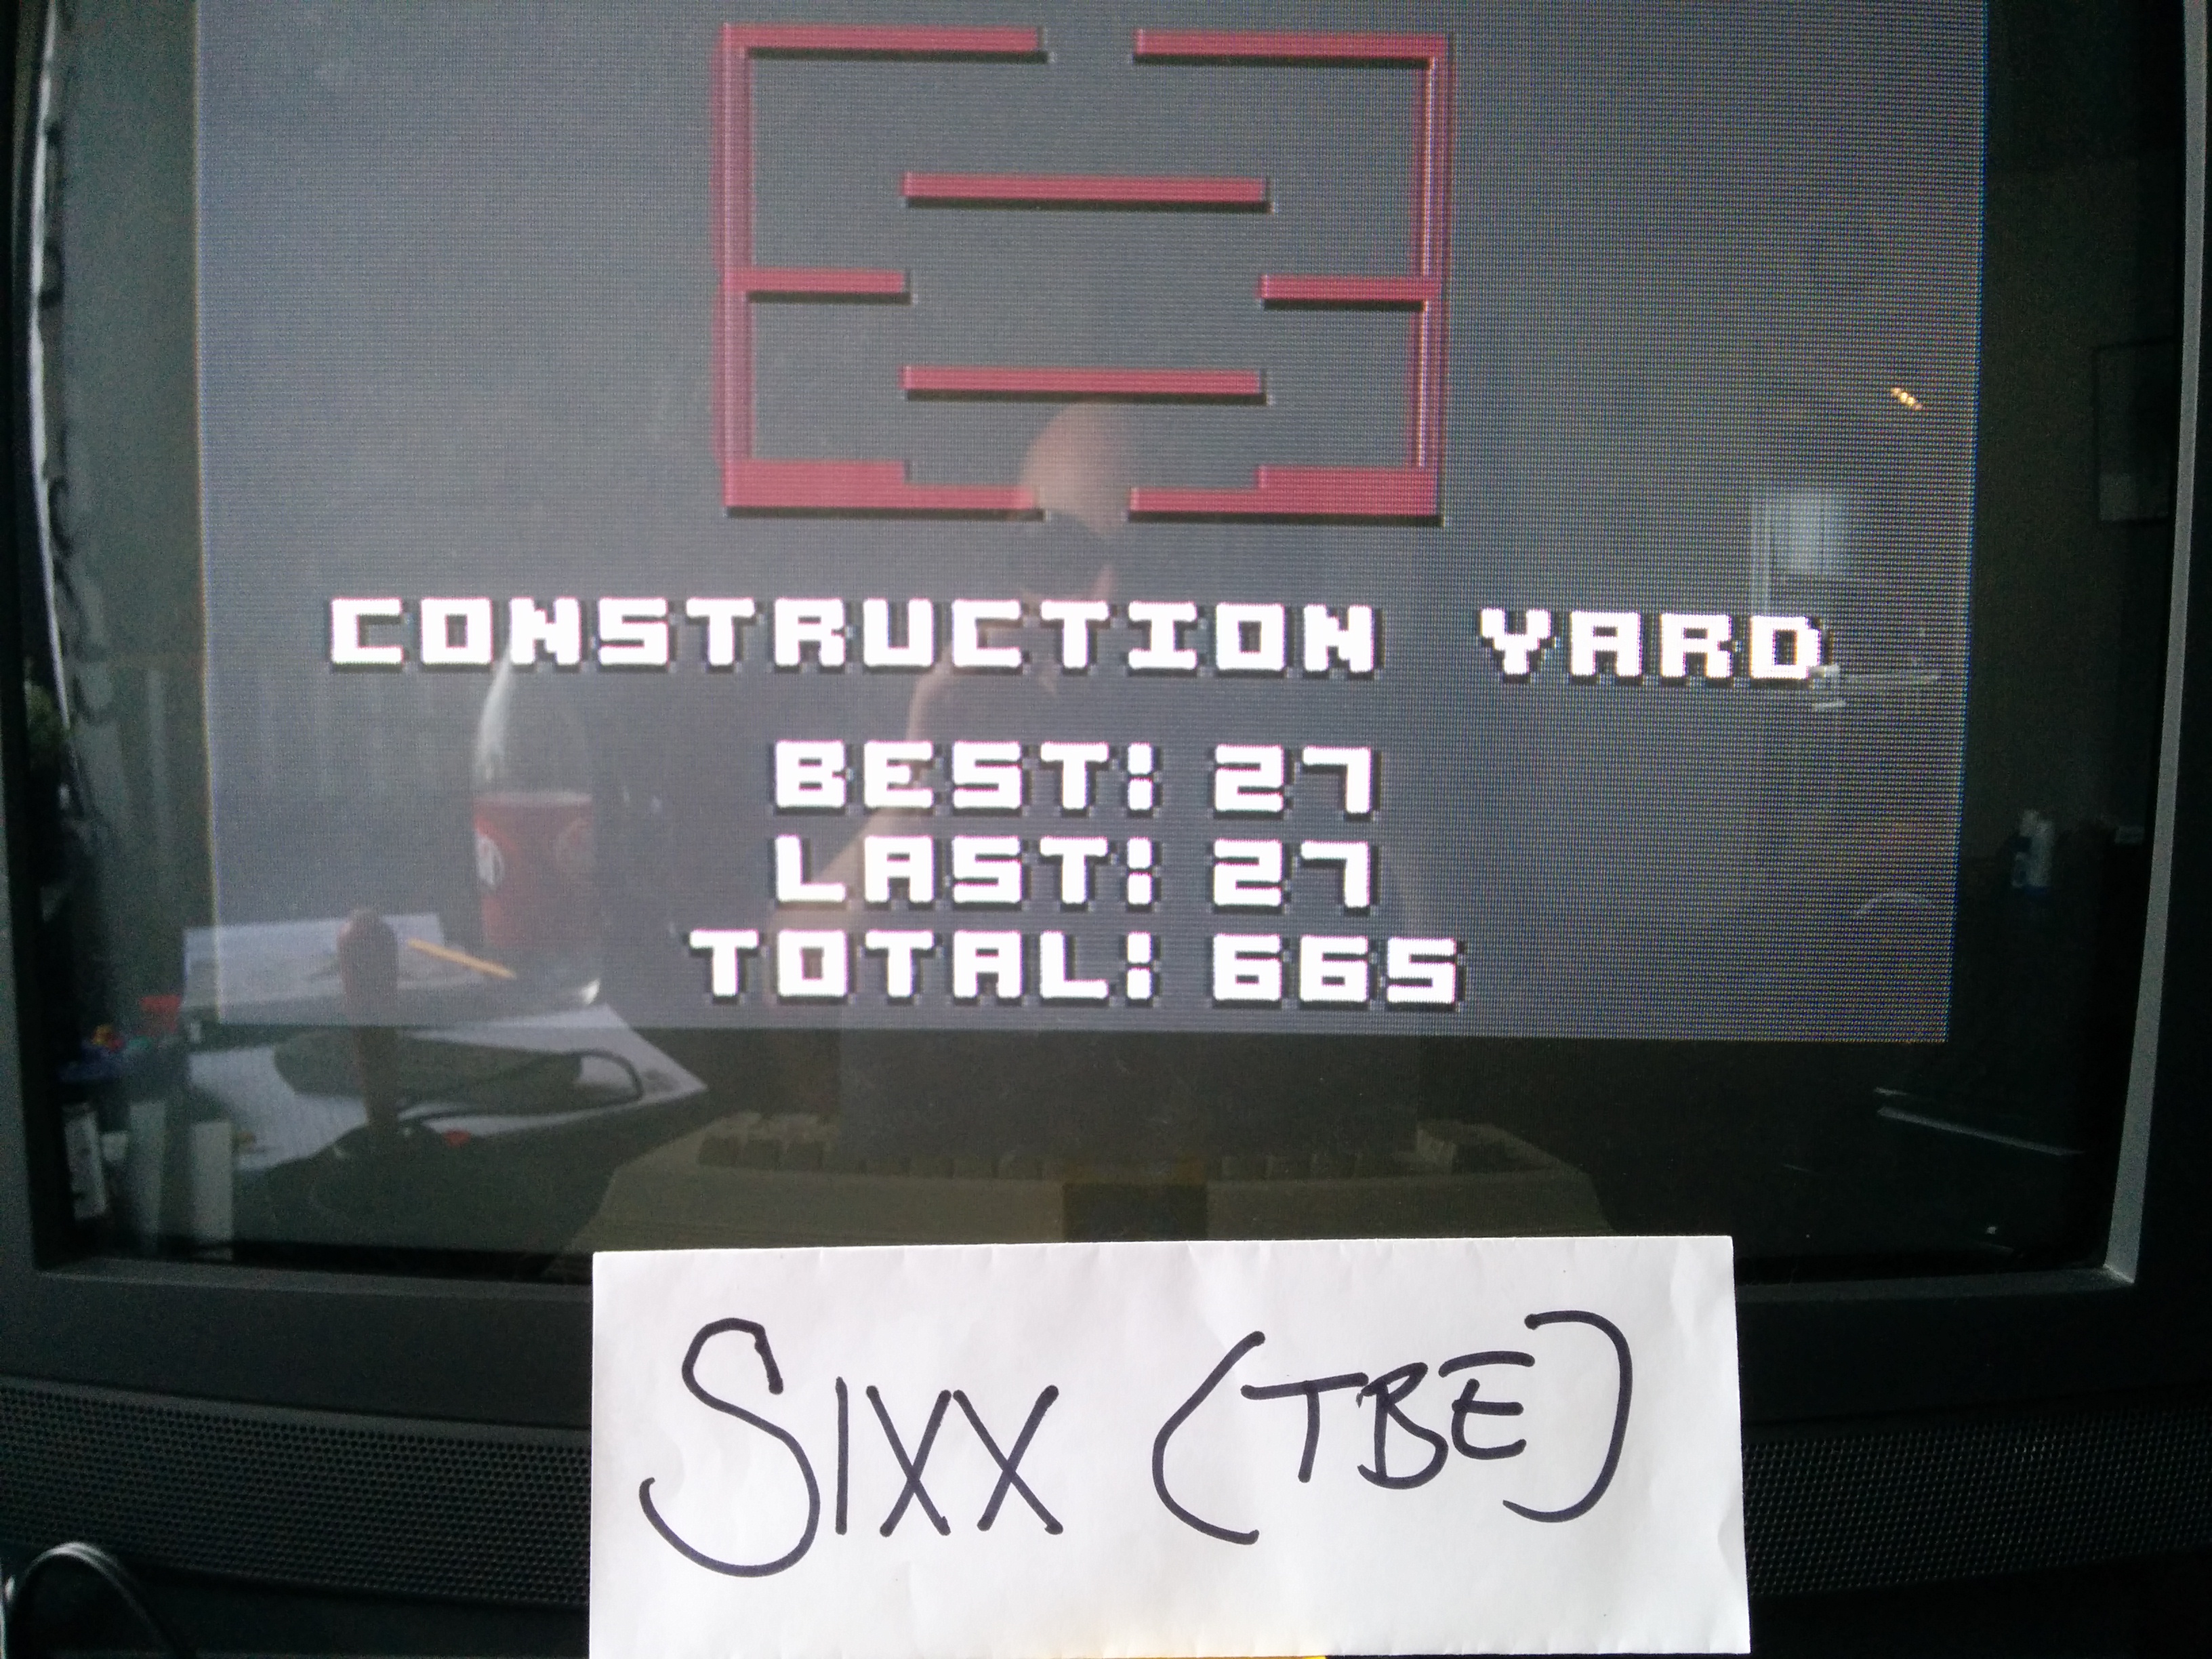 Sixx: Super Bread Box: Construction Yard (Commodore 64) 27 points on 2014-04-24 06:41:06